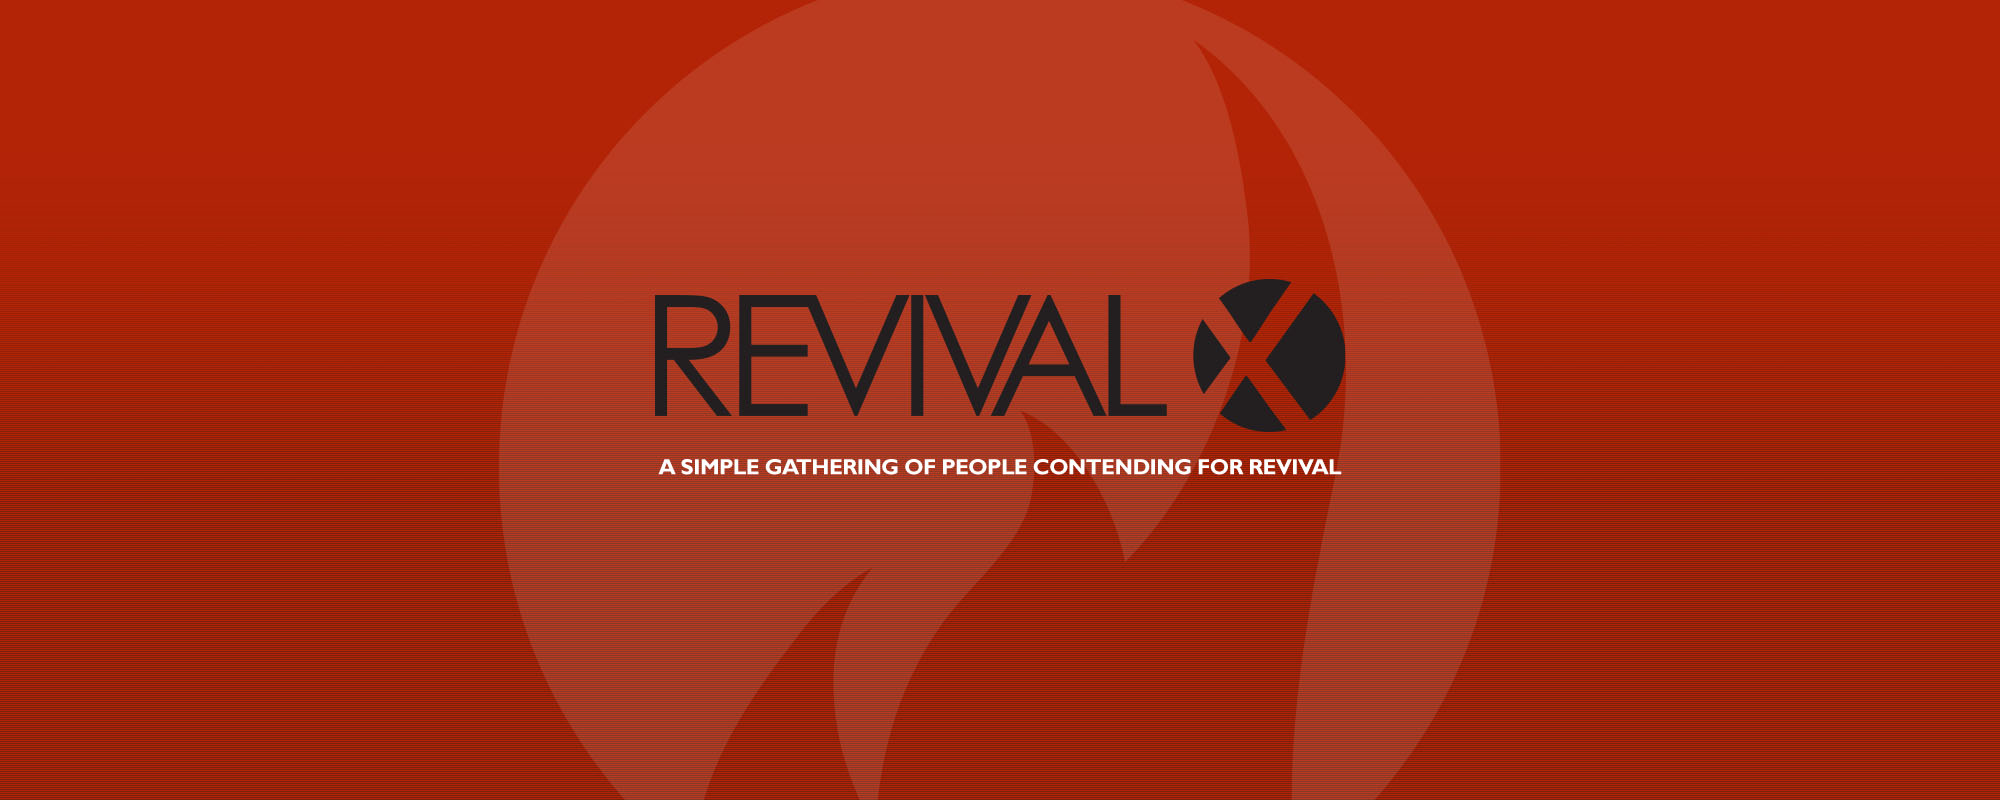 Revival X